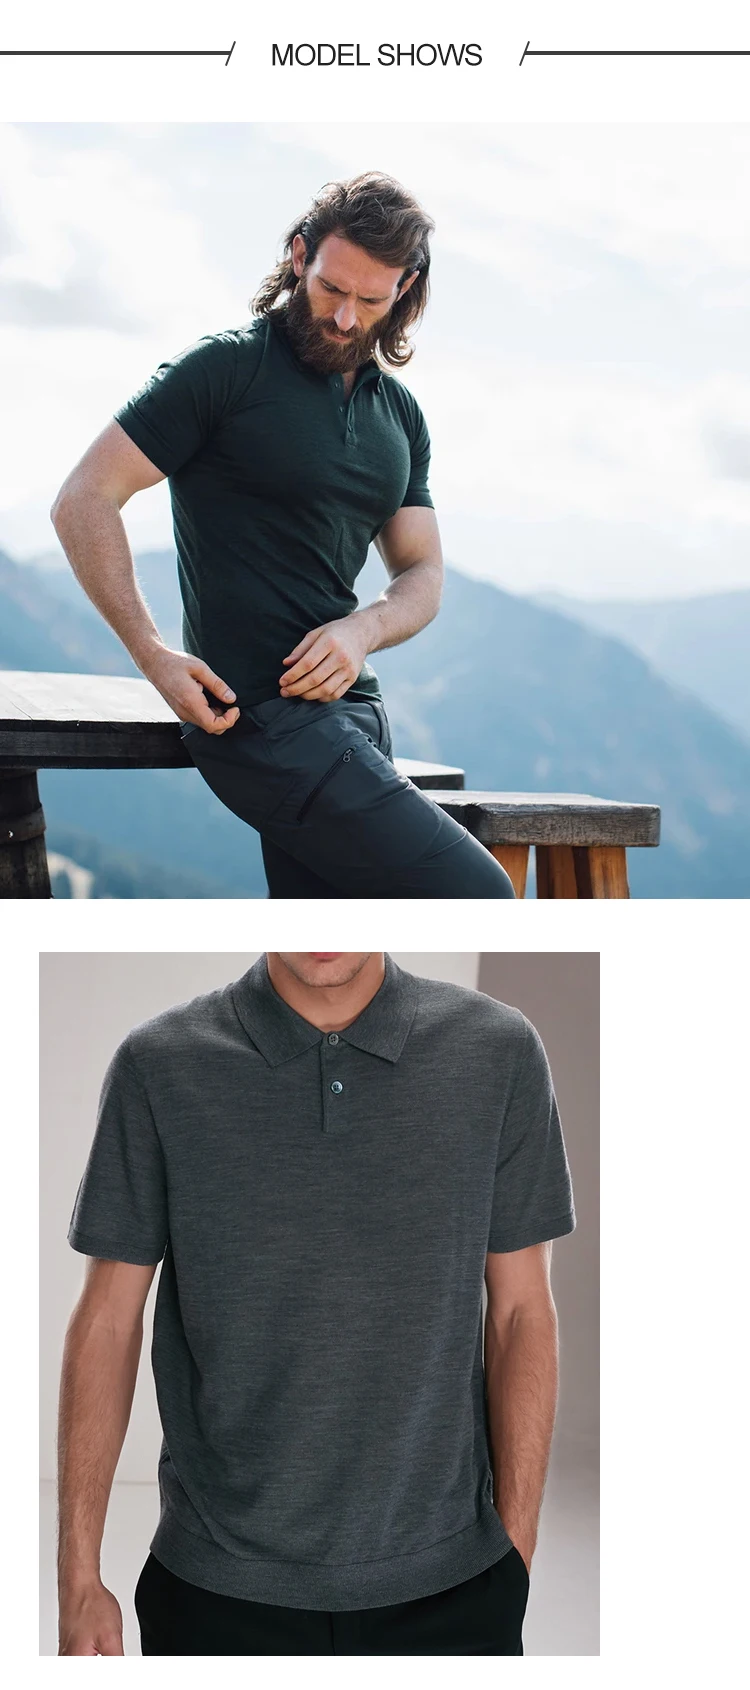 Enerup custom elastane 100% merino wool cotton mens zip camisetas polo homme t-shirt sweatsuits